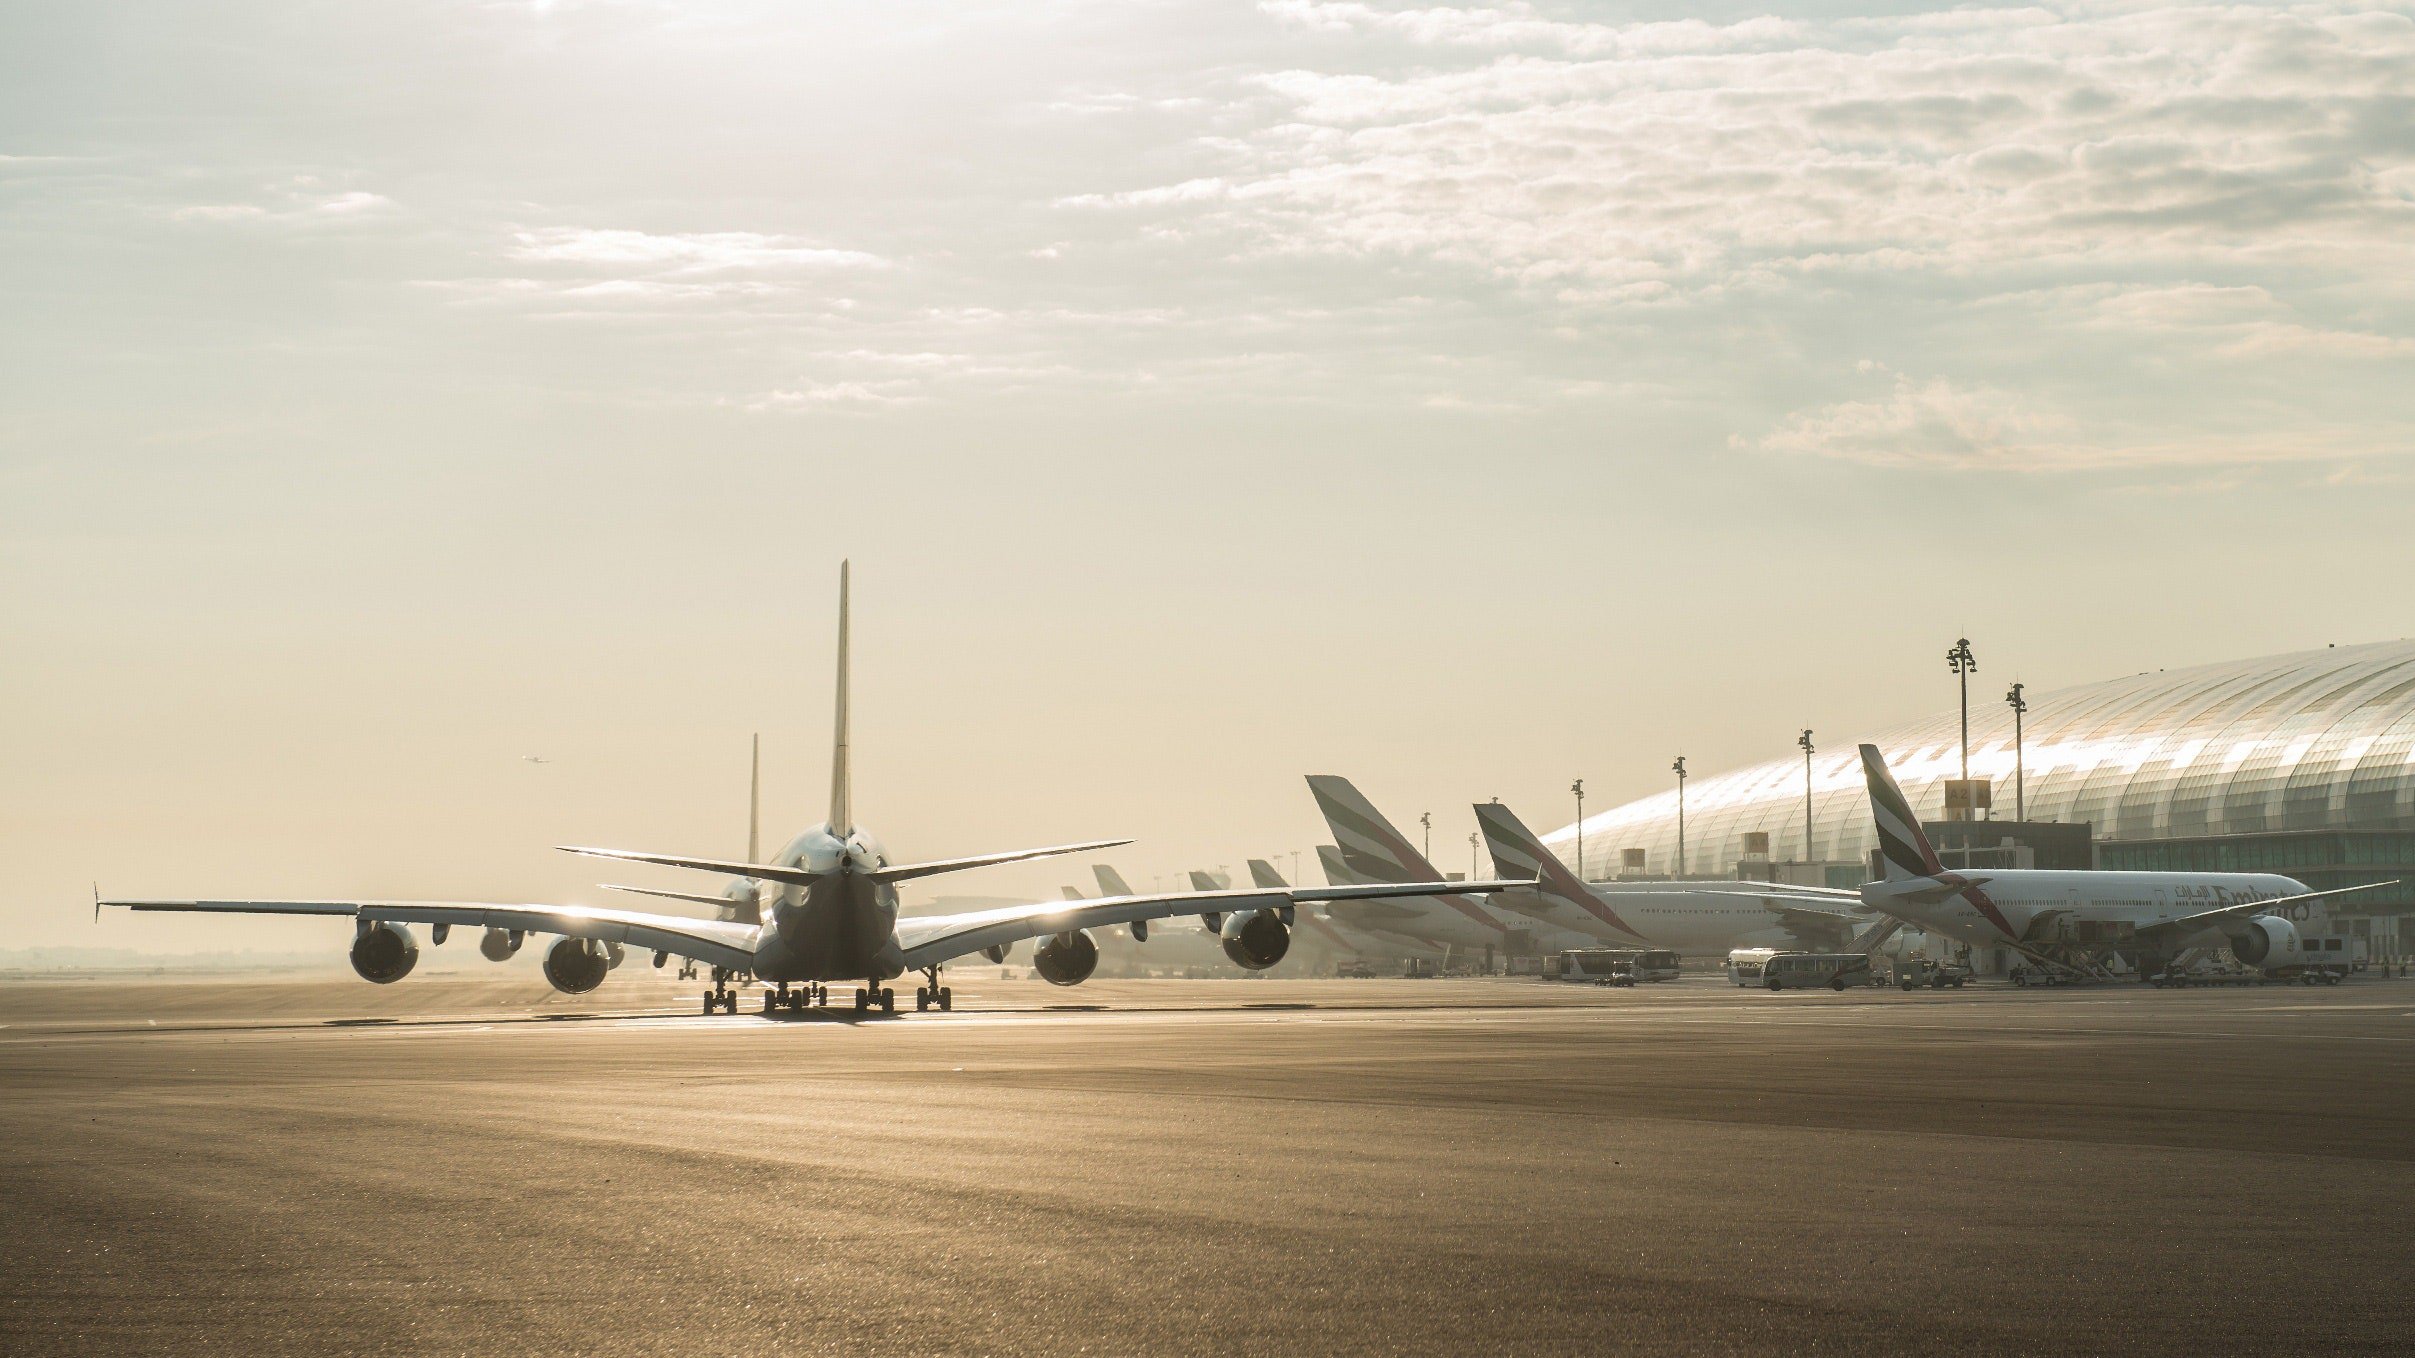 Dubai Airport Is World's Busiest for International Travel (Again). Condé Nast Traveler